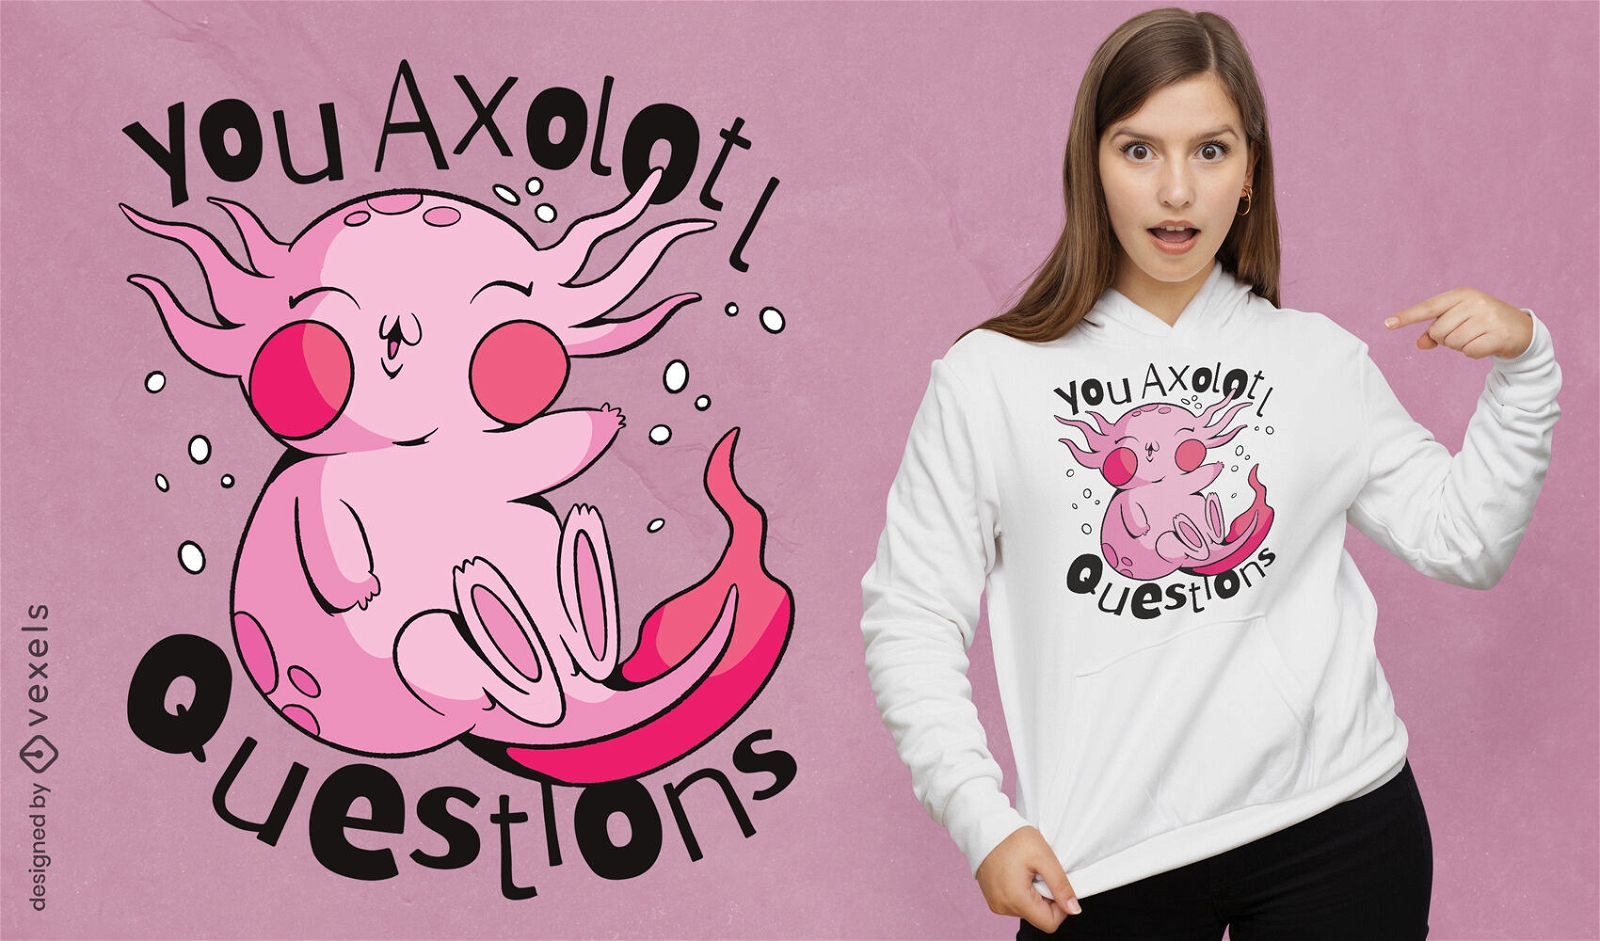 Axolotl questiona design de camiseta engraçada